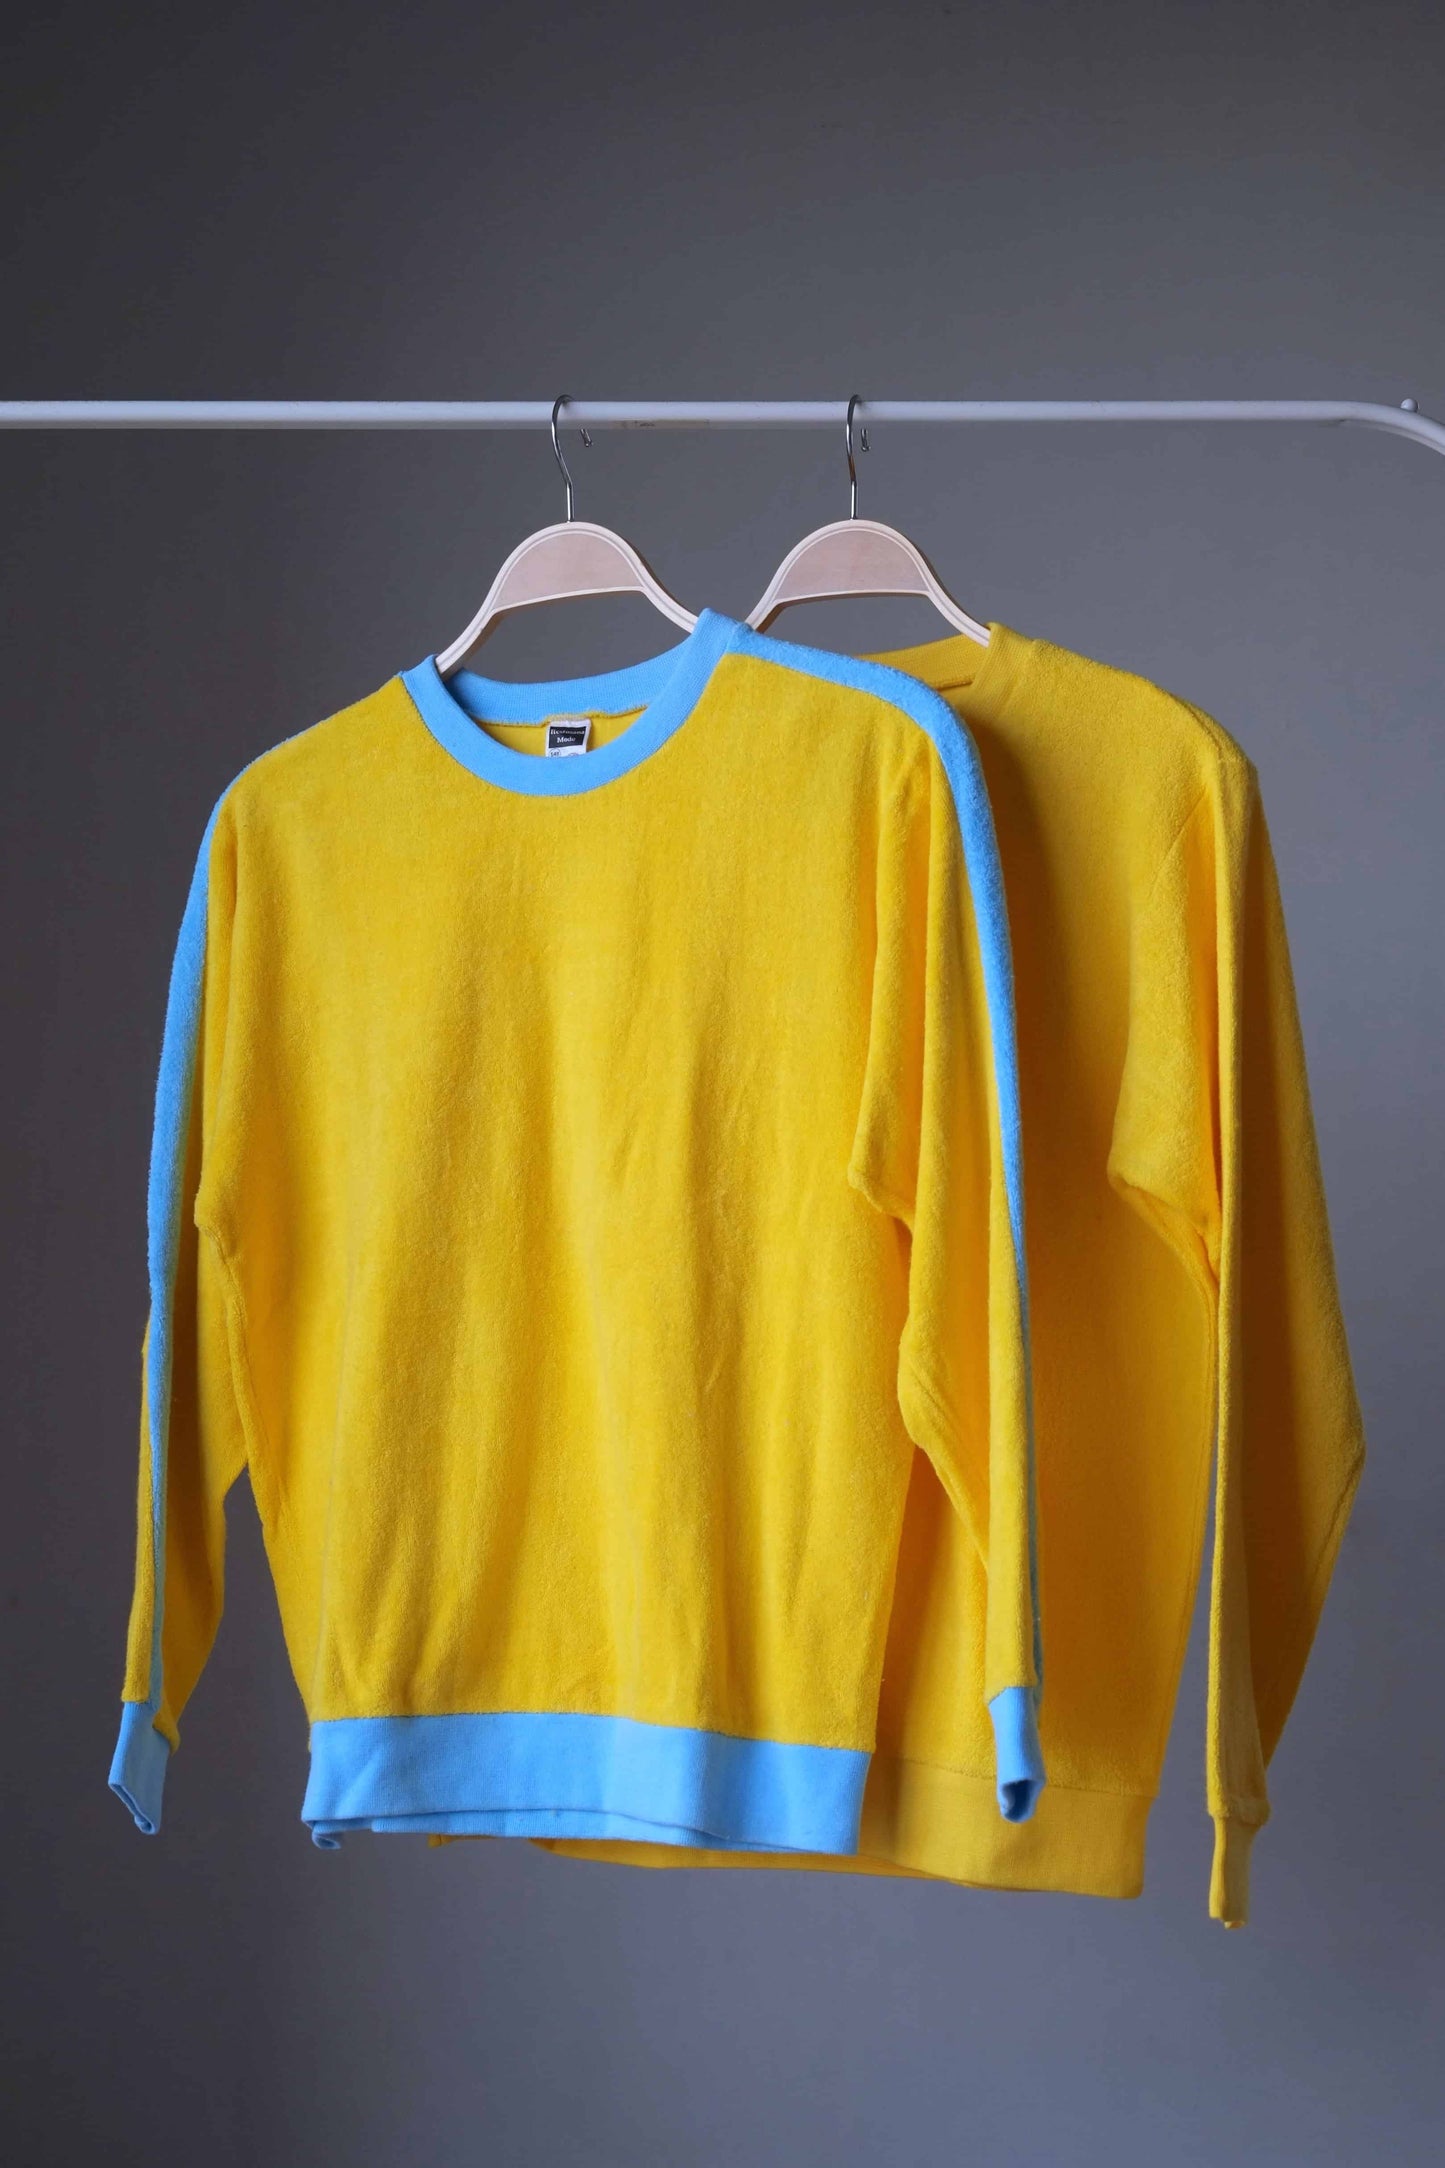 RESTOSANA Vintage Terry Sweatshirt yellow/blue and yellow